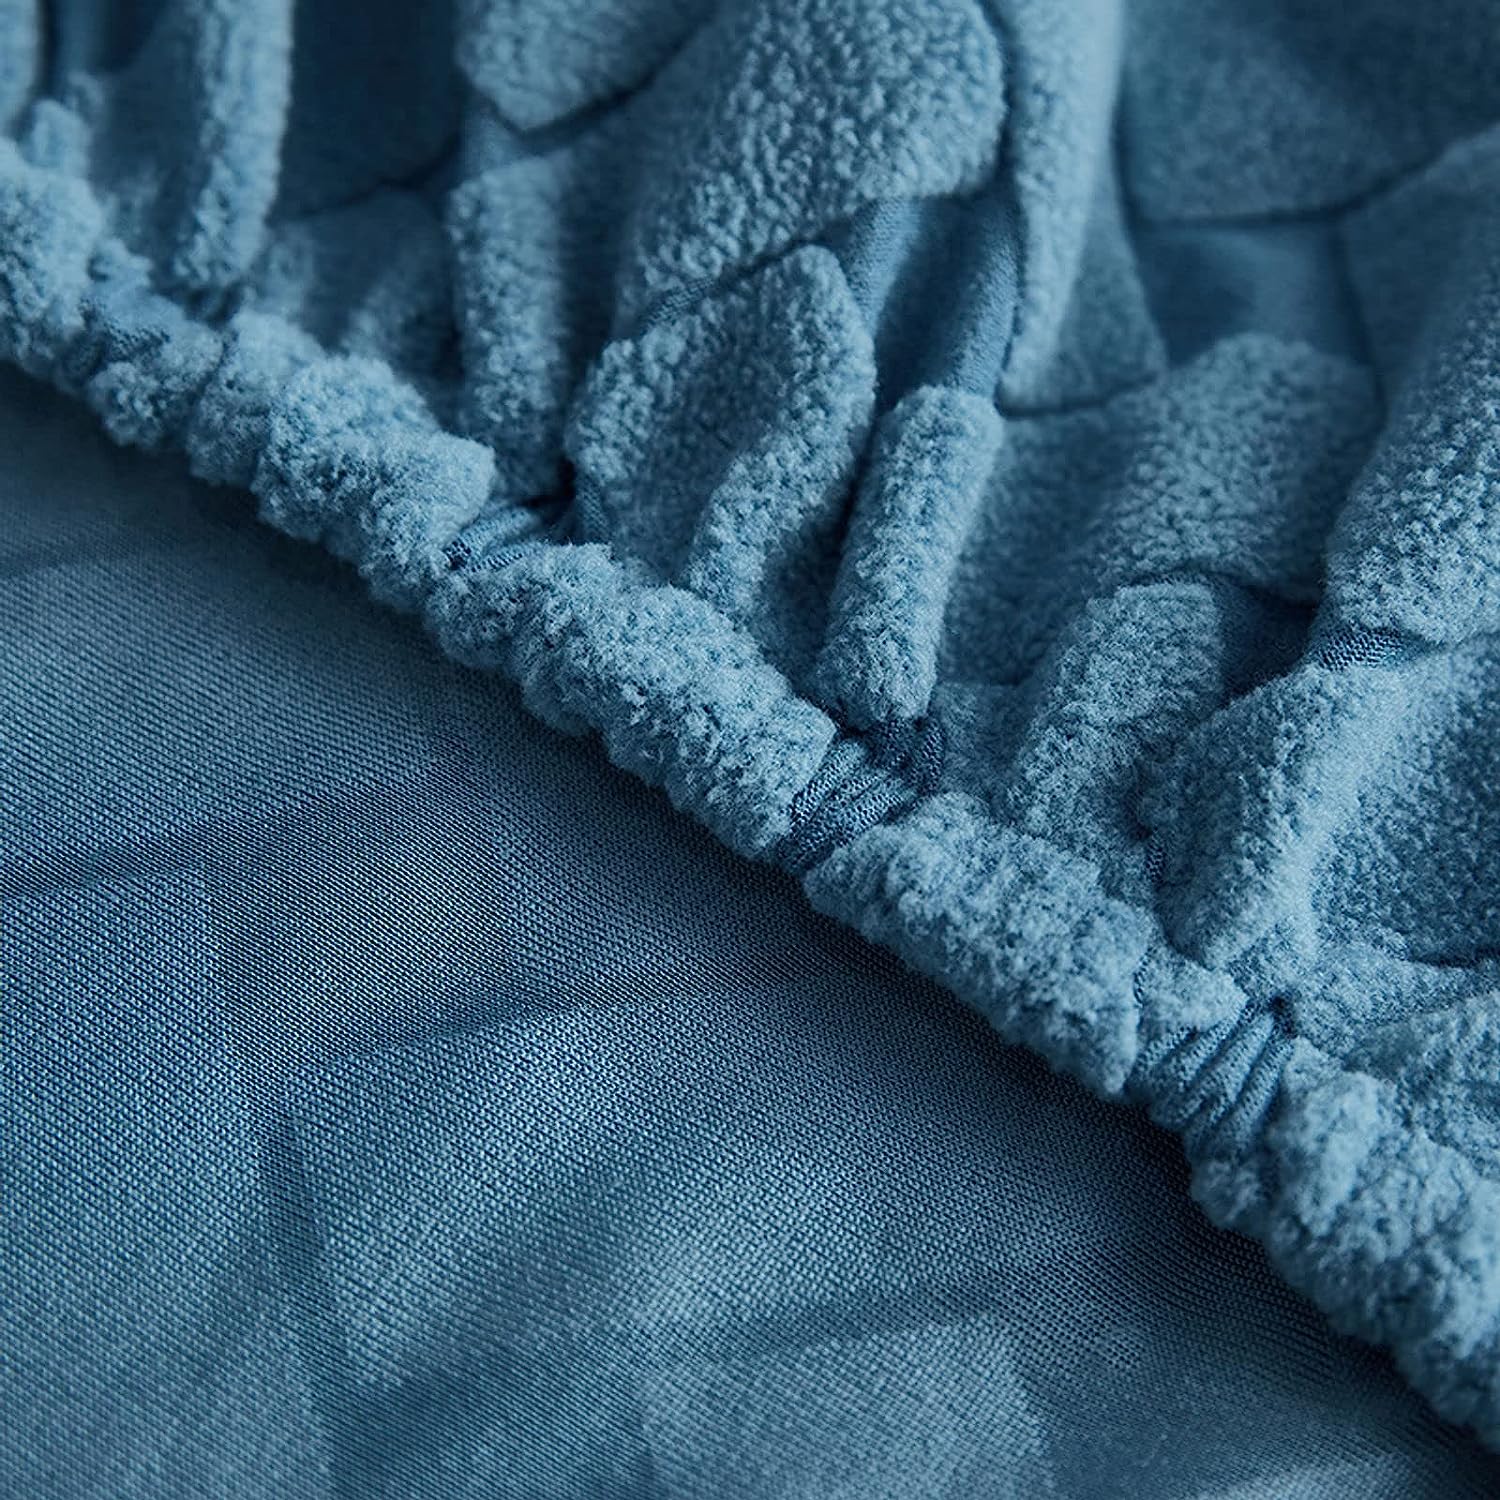 Sofa Cushion Cover - Denim Blue - Soft Elastic Jacquard Weave